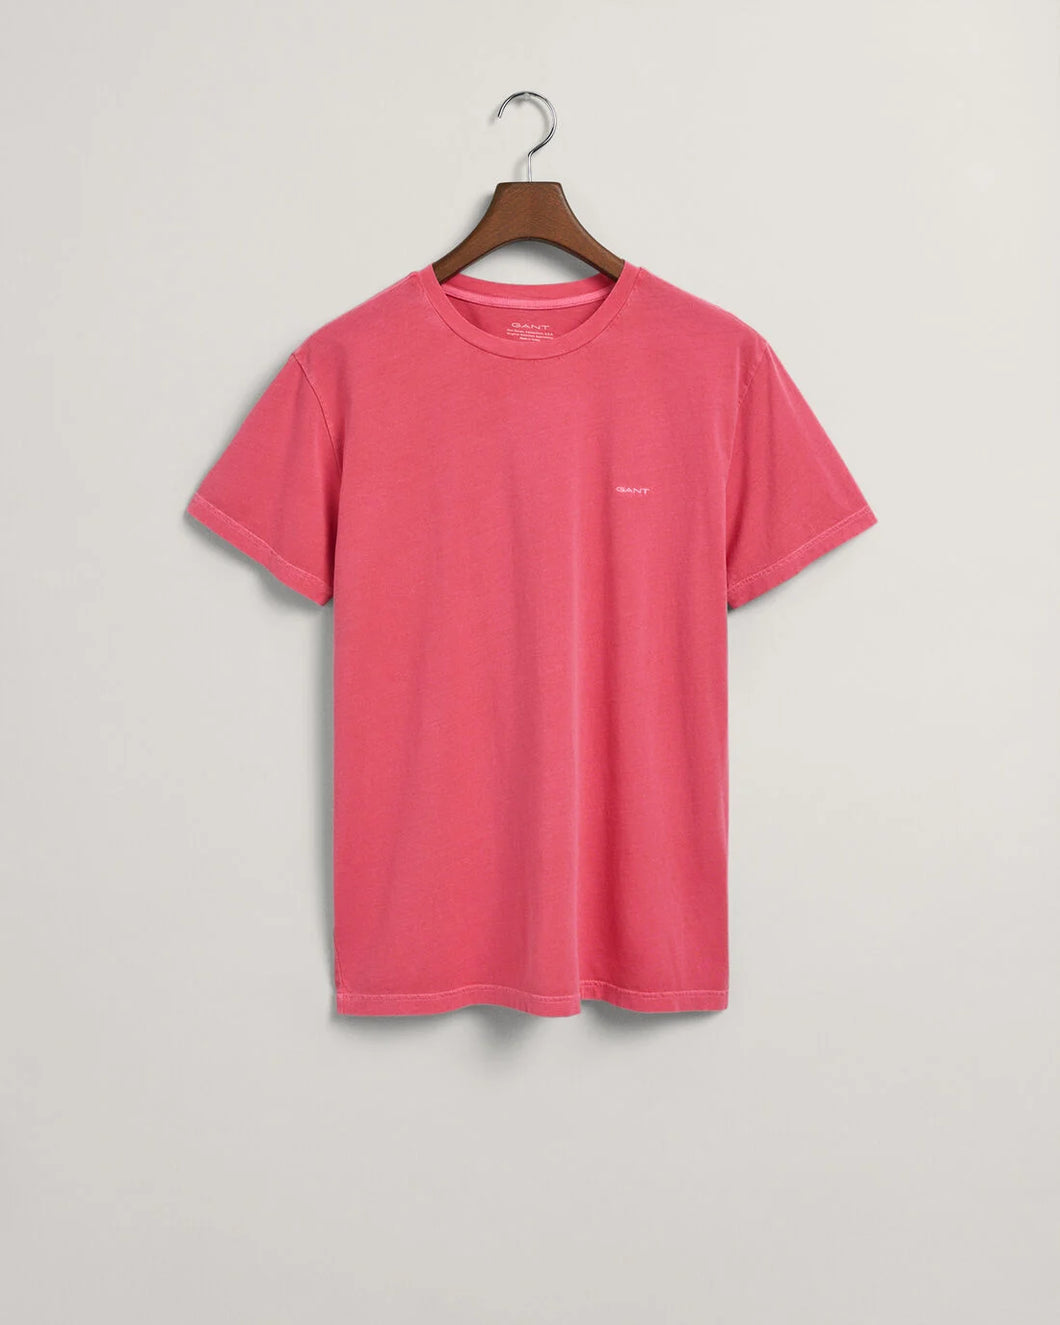 GANT - Sunfaded T-Shirt, Magenta Pink